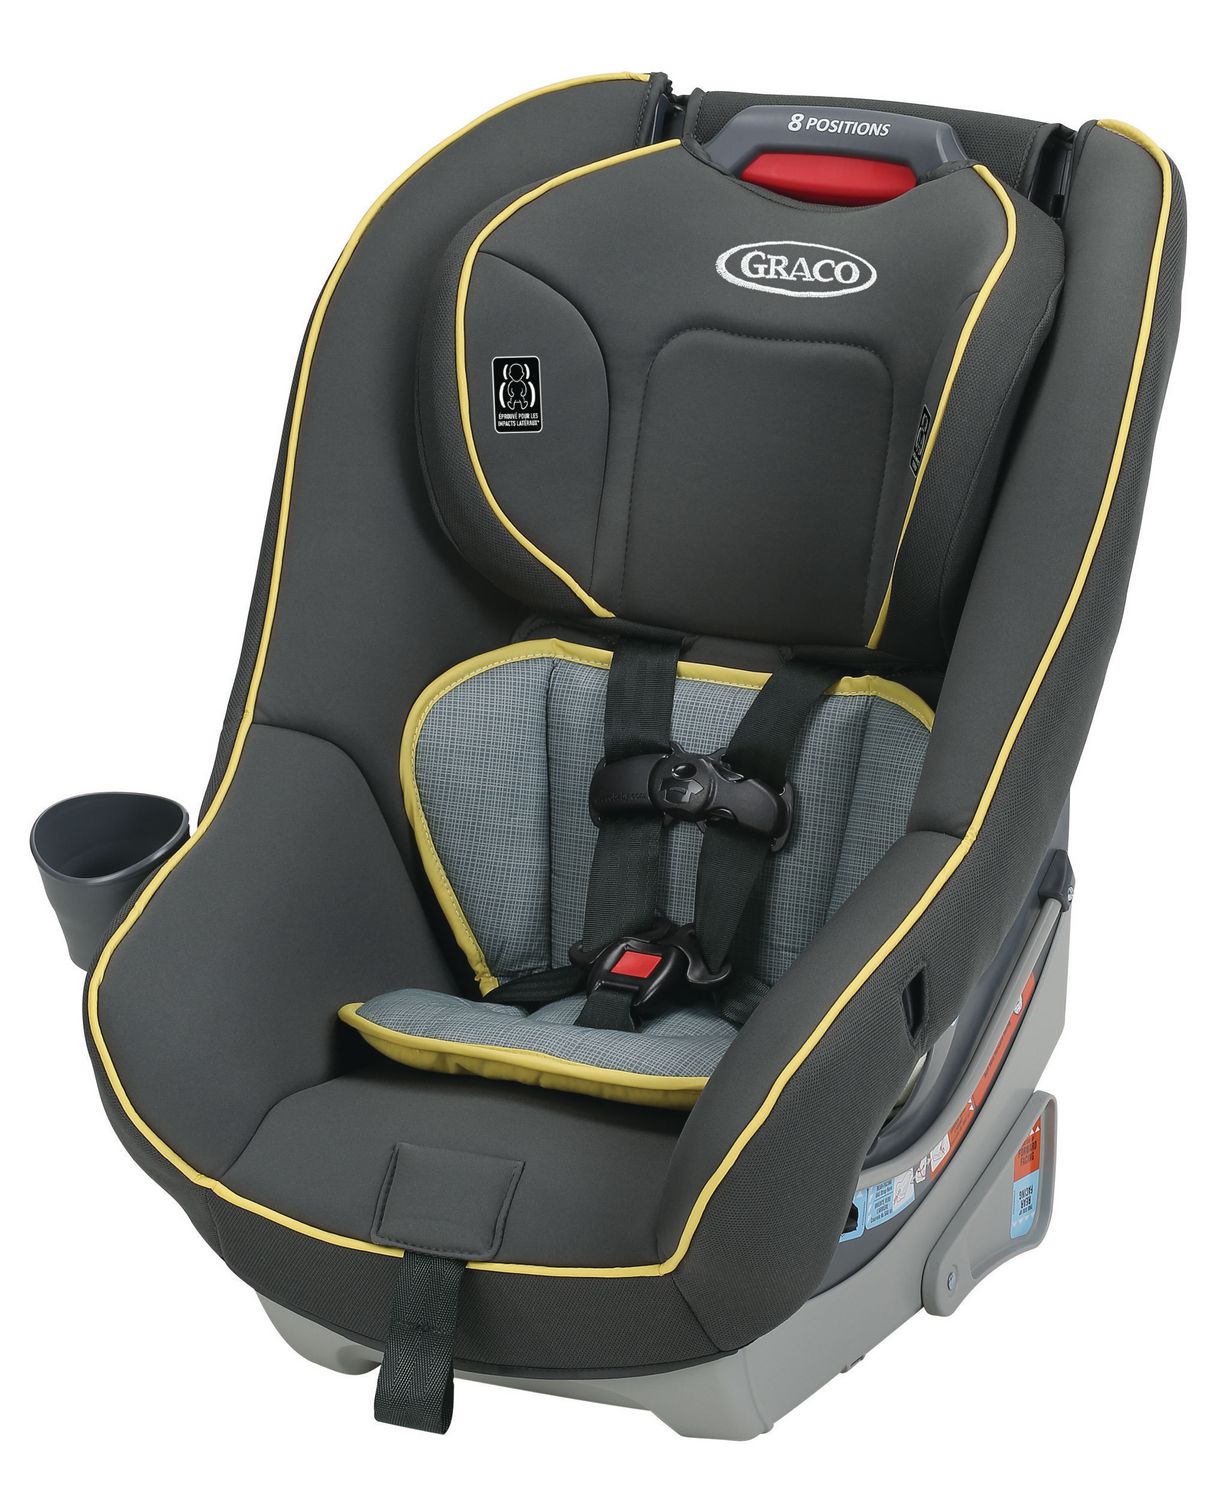 Graco contender 65 convertible car seat information